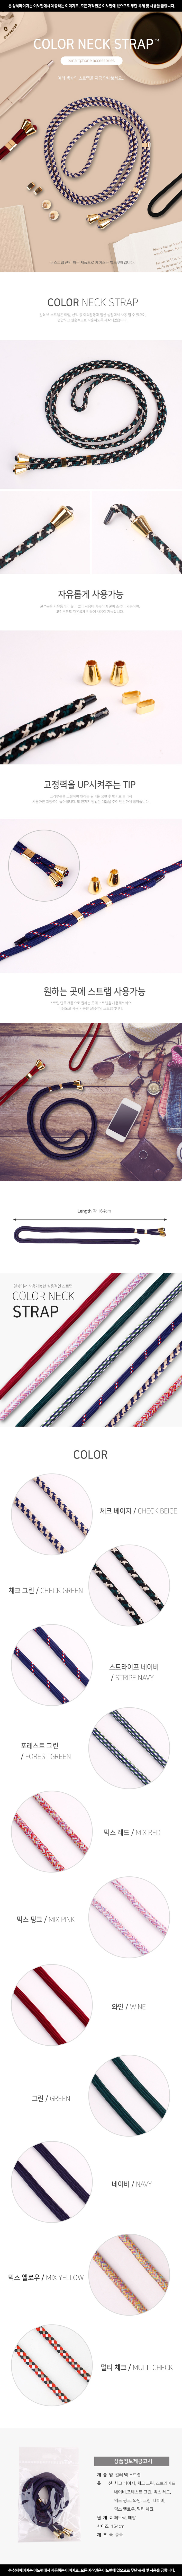 color_neck_strap.jpg